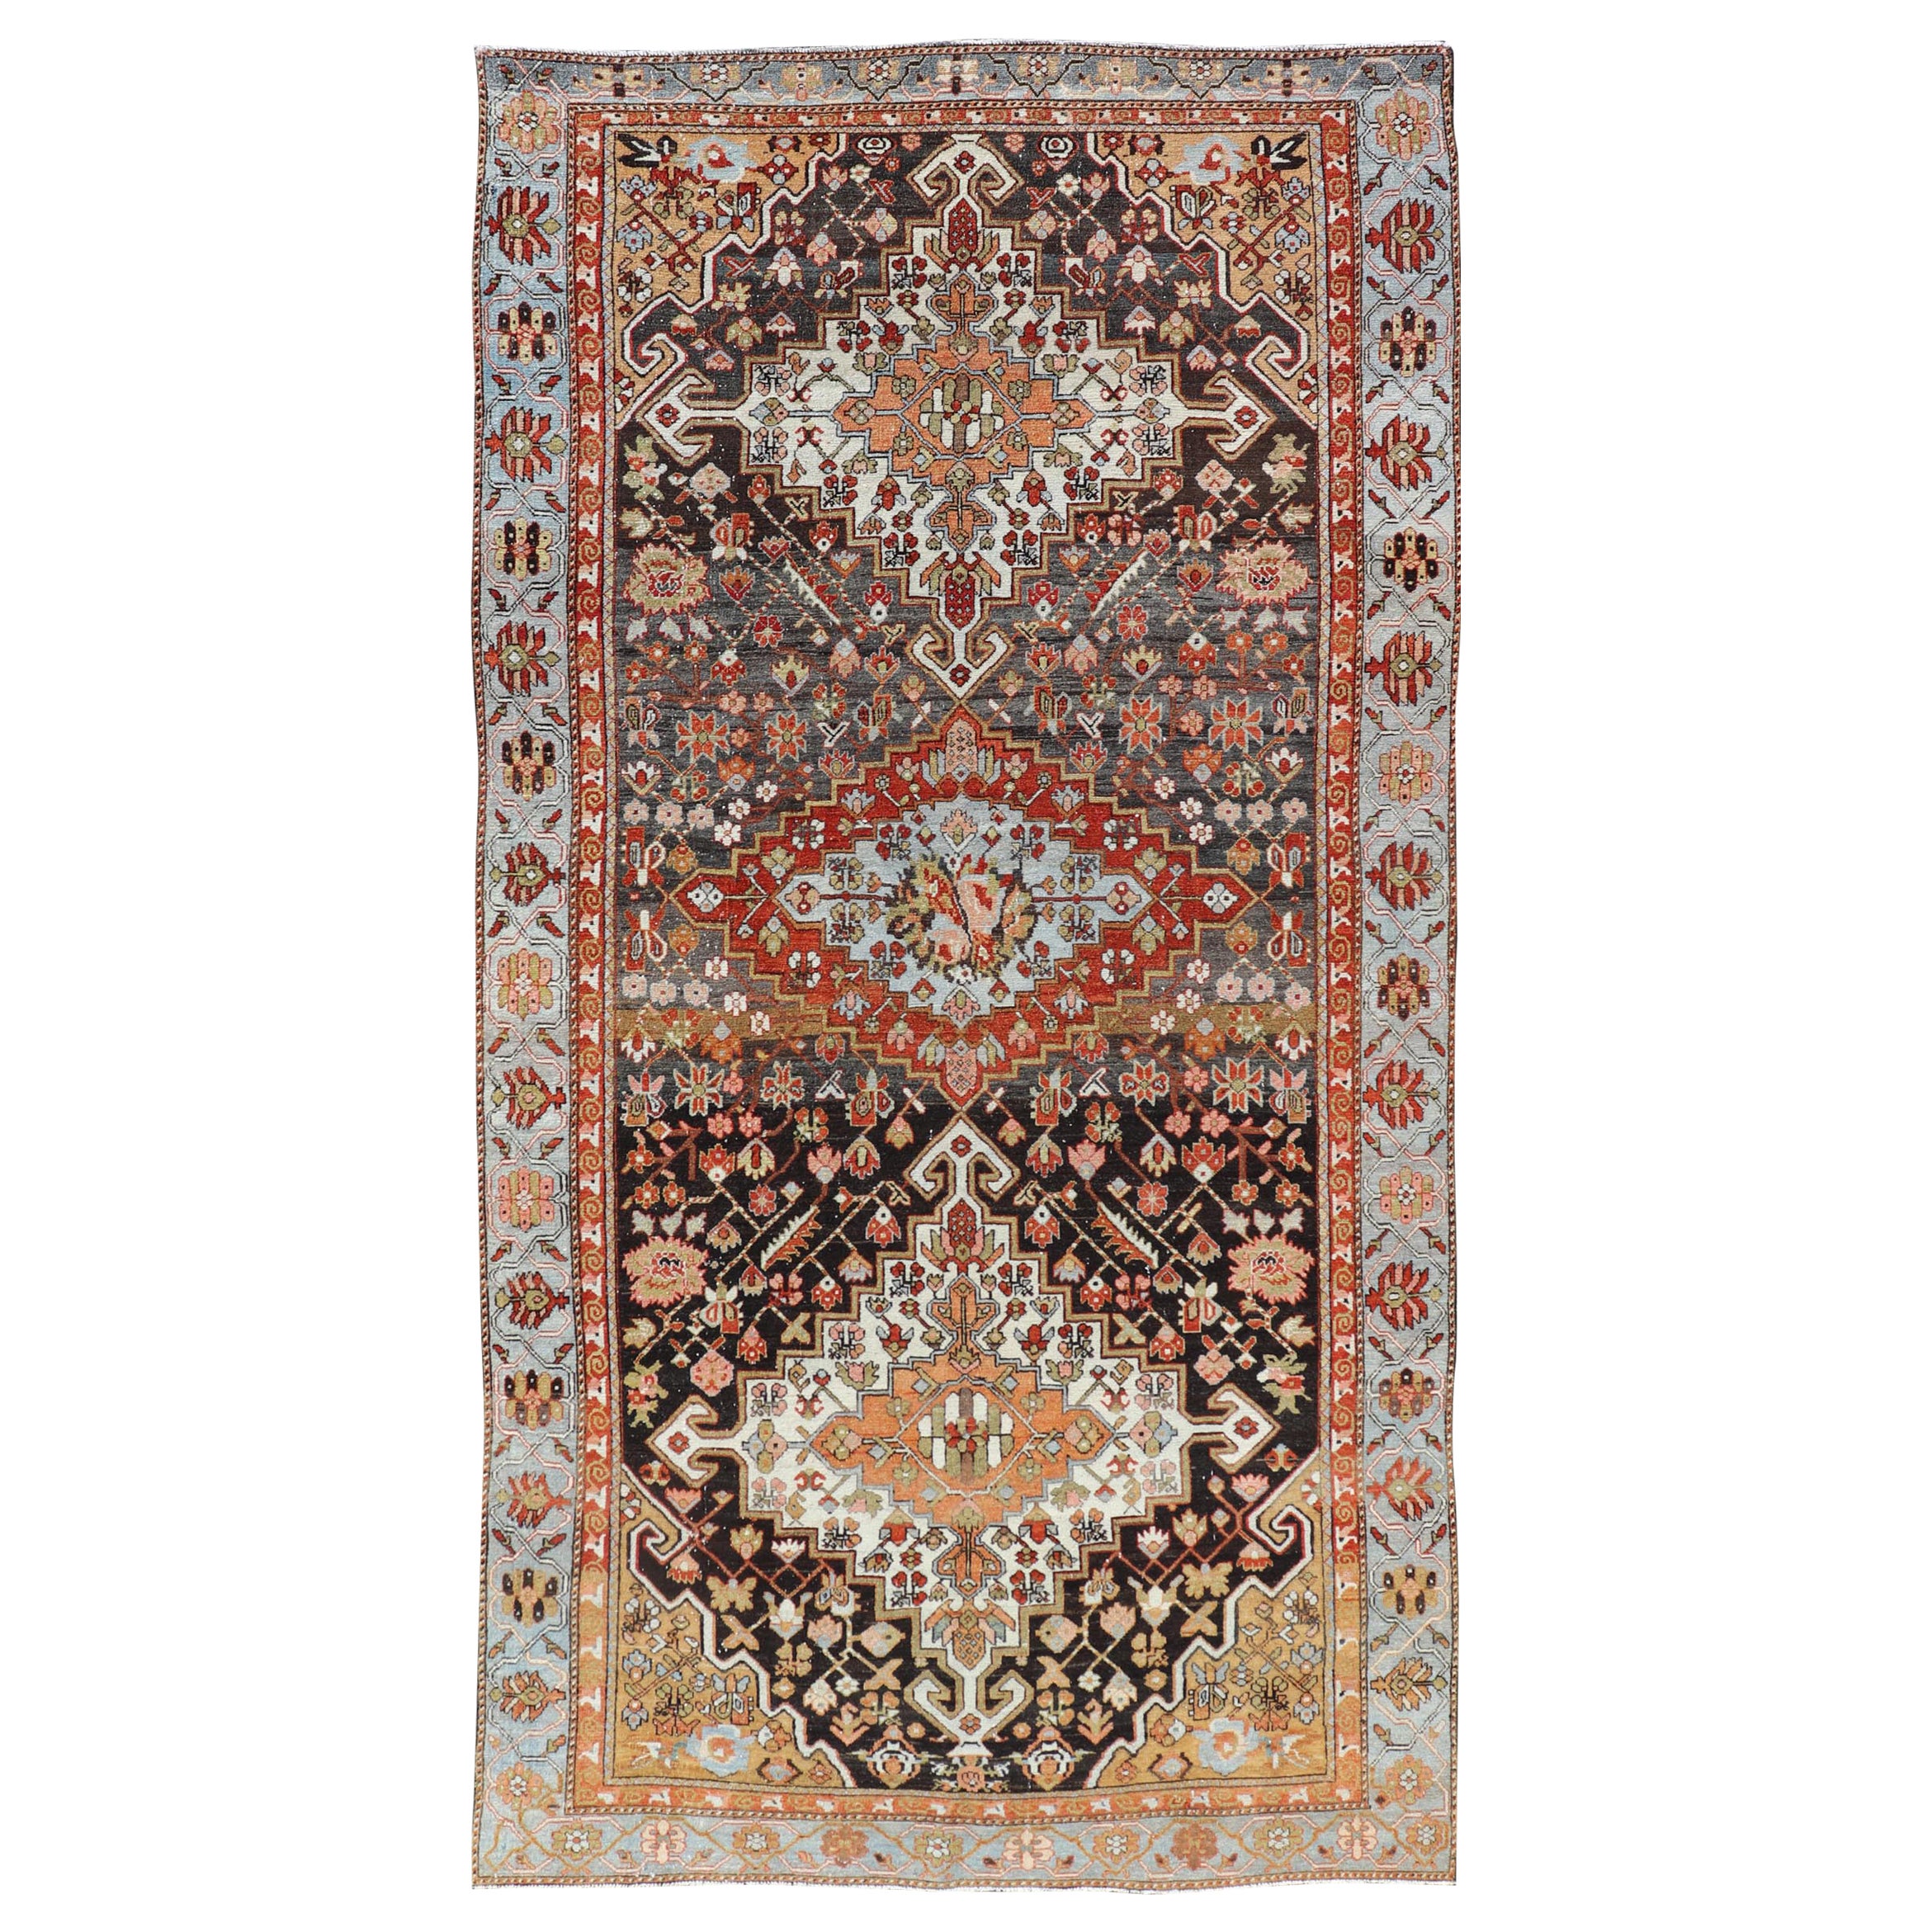 Antique Persian Tribal Design Bakhtiari Rug in Multi Colors By Keivan Woven Arts